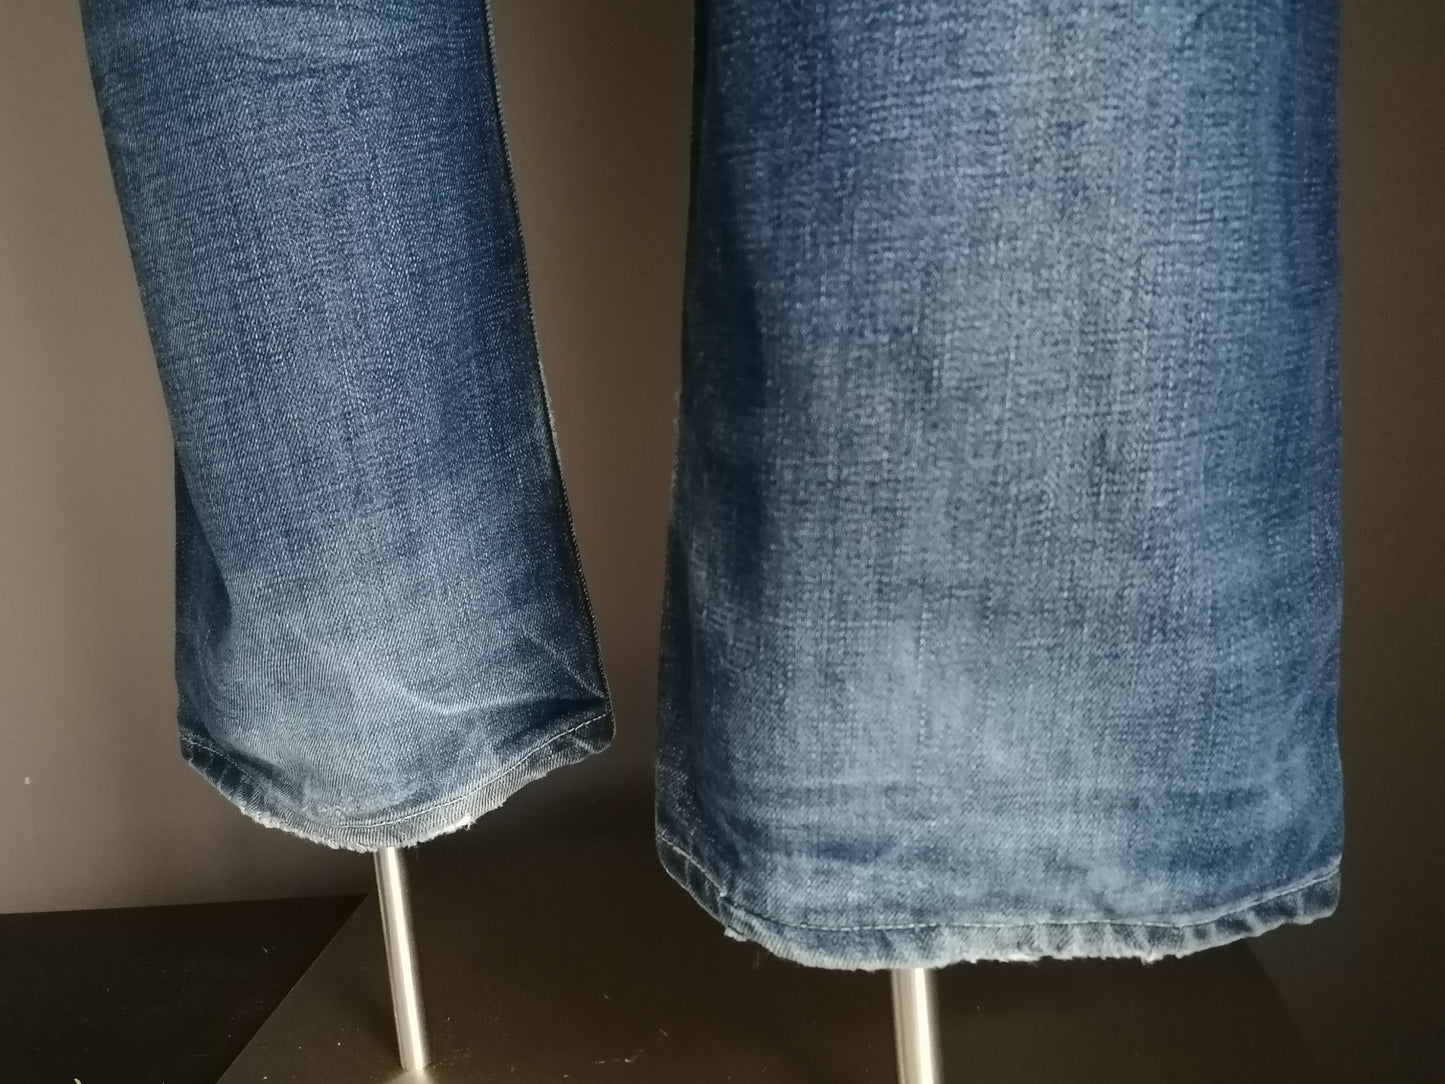 Levis Jeans. Blau gefärbt. W34 - L28.